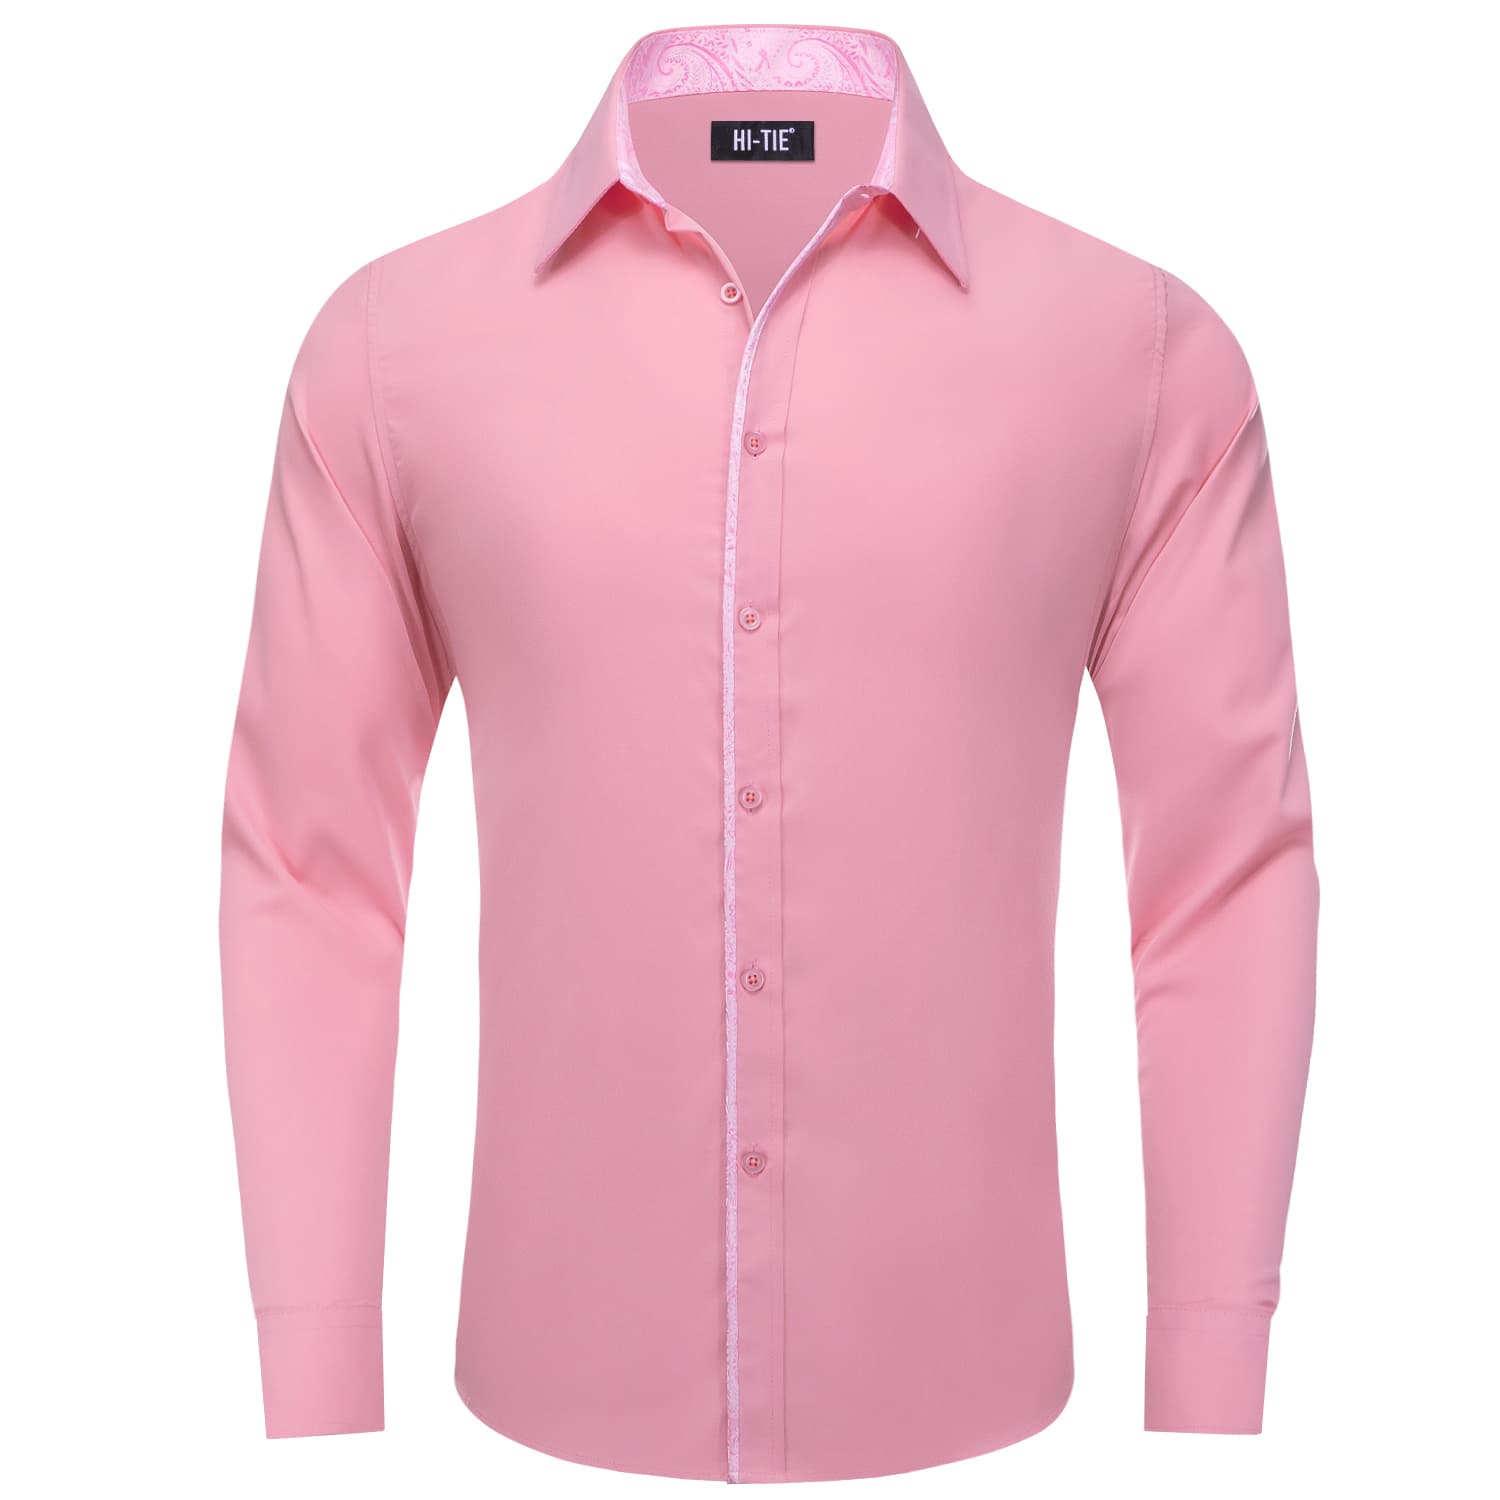 Hi-Tie Button Down Shirt Solid LightPink Shirt with Pink Jacquard Collar